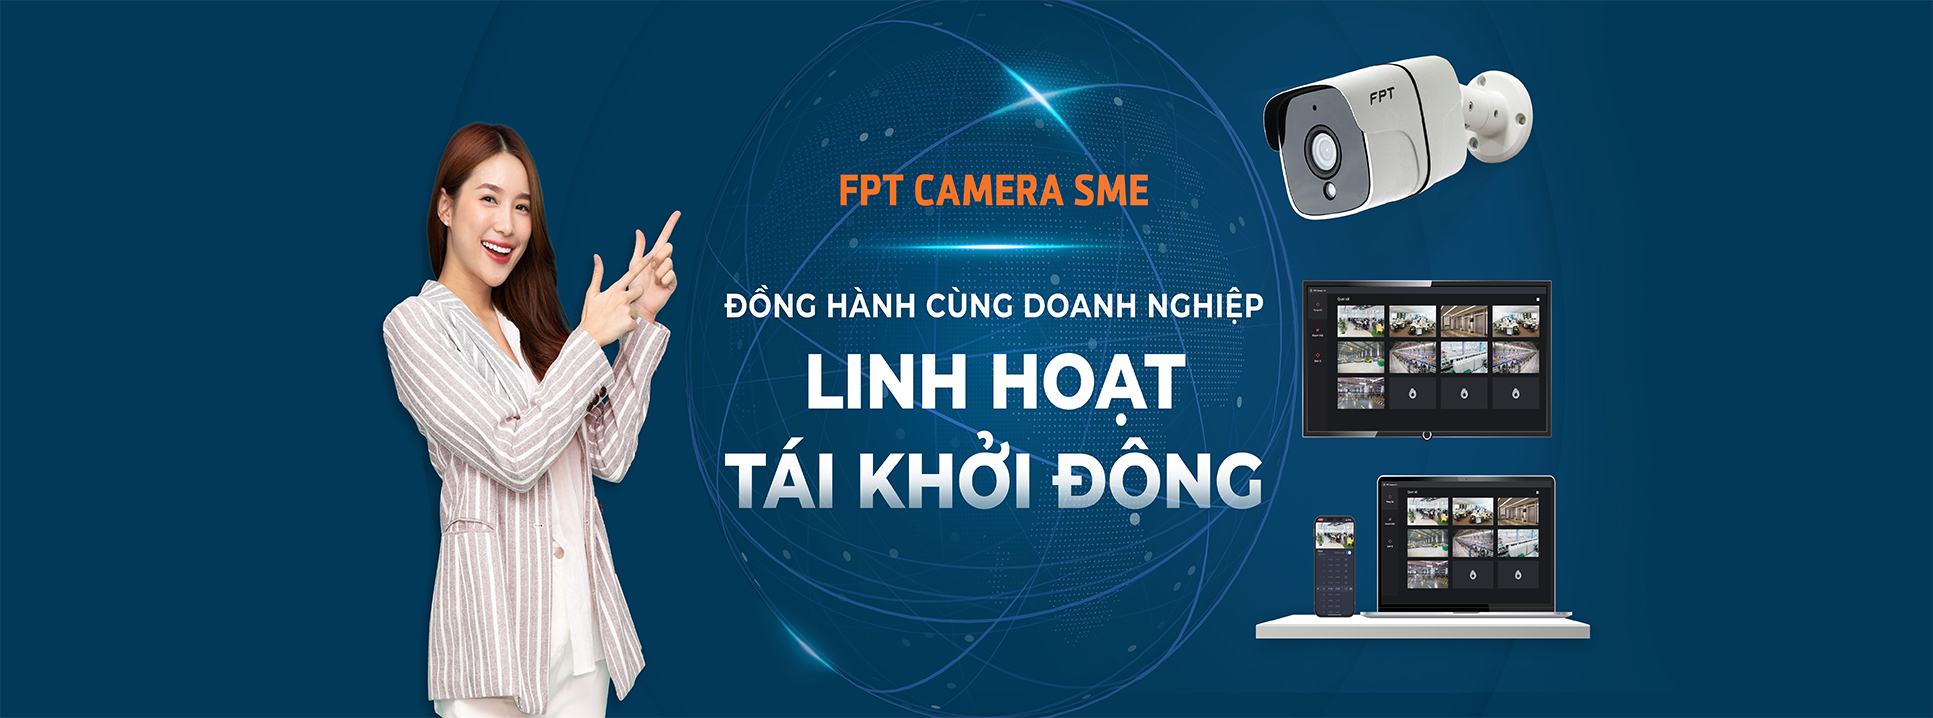 https://fpthaiphong.org/san-pham-dich-vu/smart-home/fpt-camera